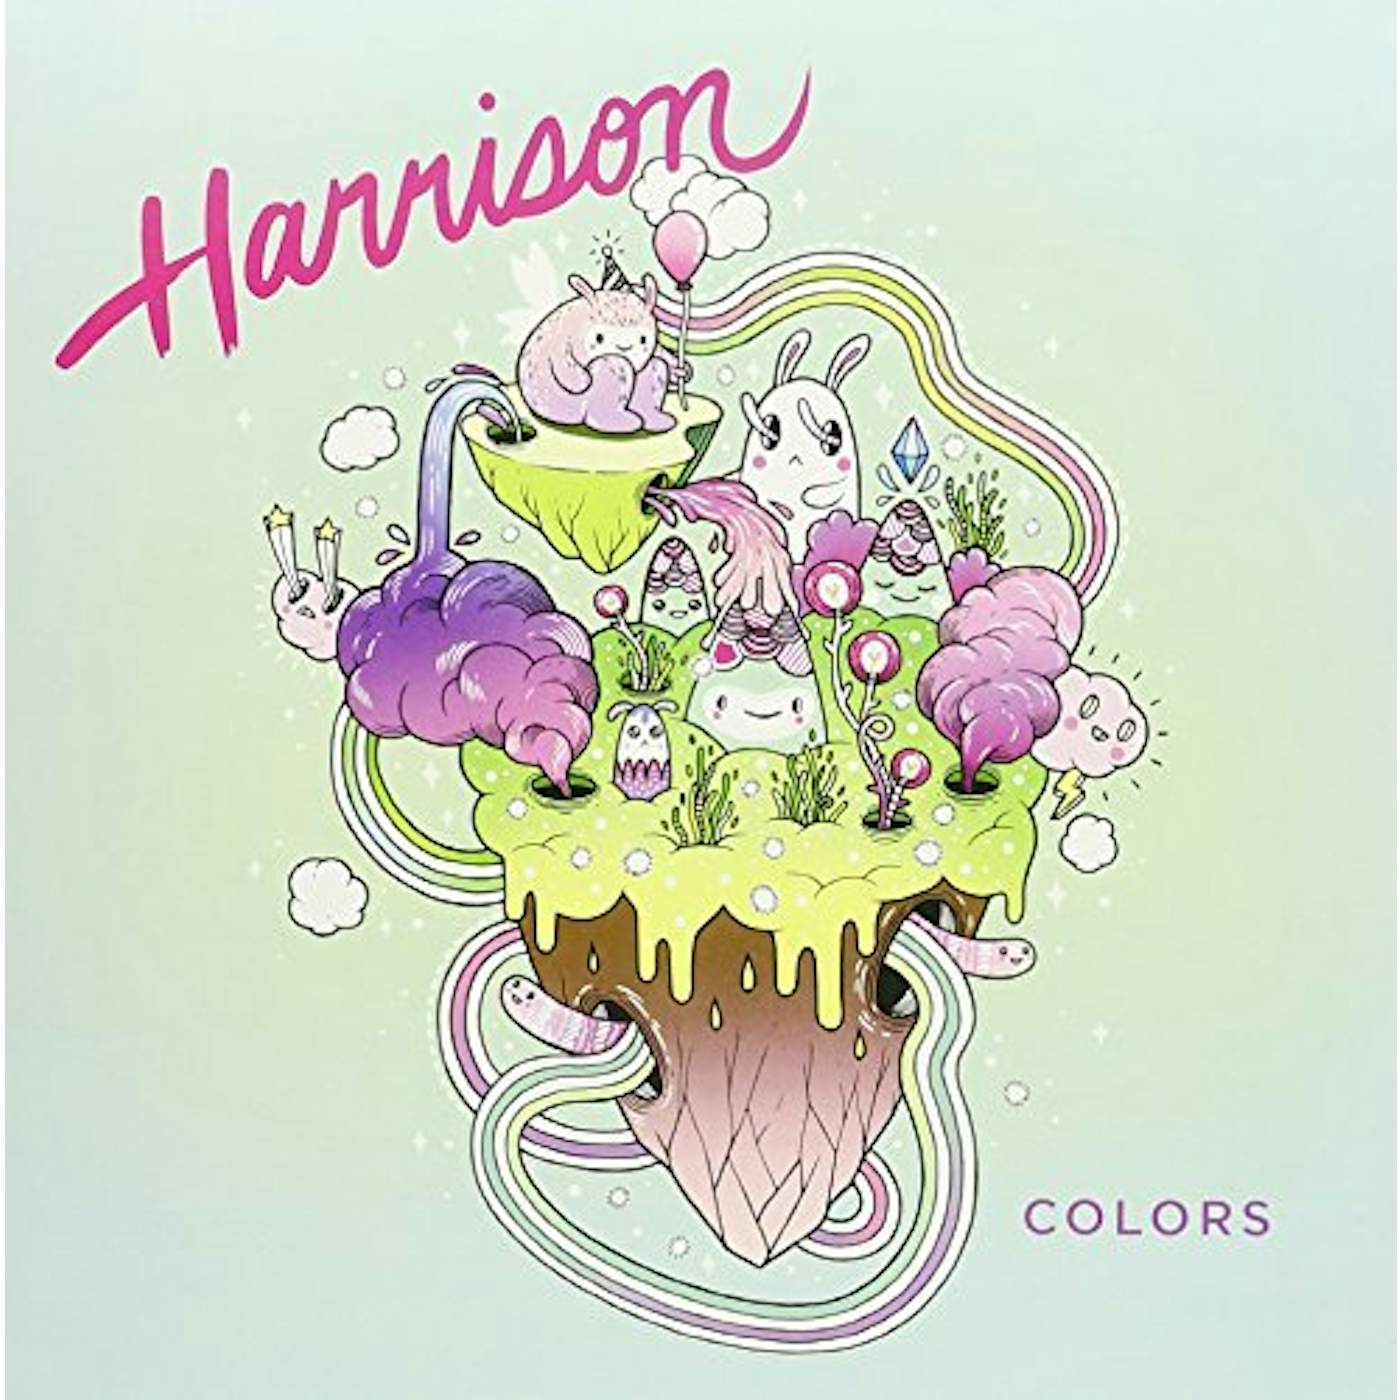 Harrison Colors Vinyl Record